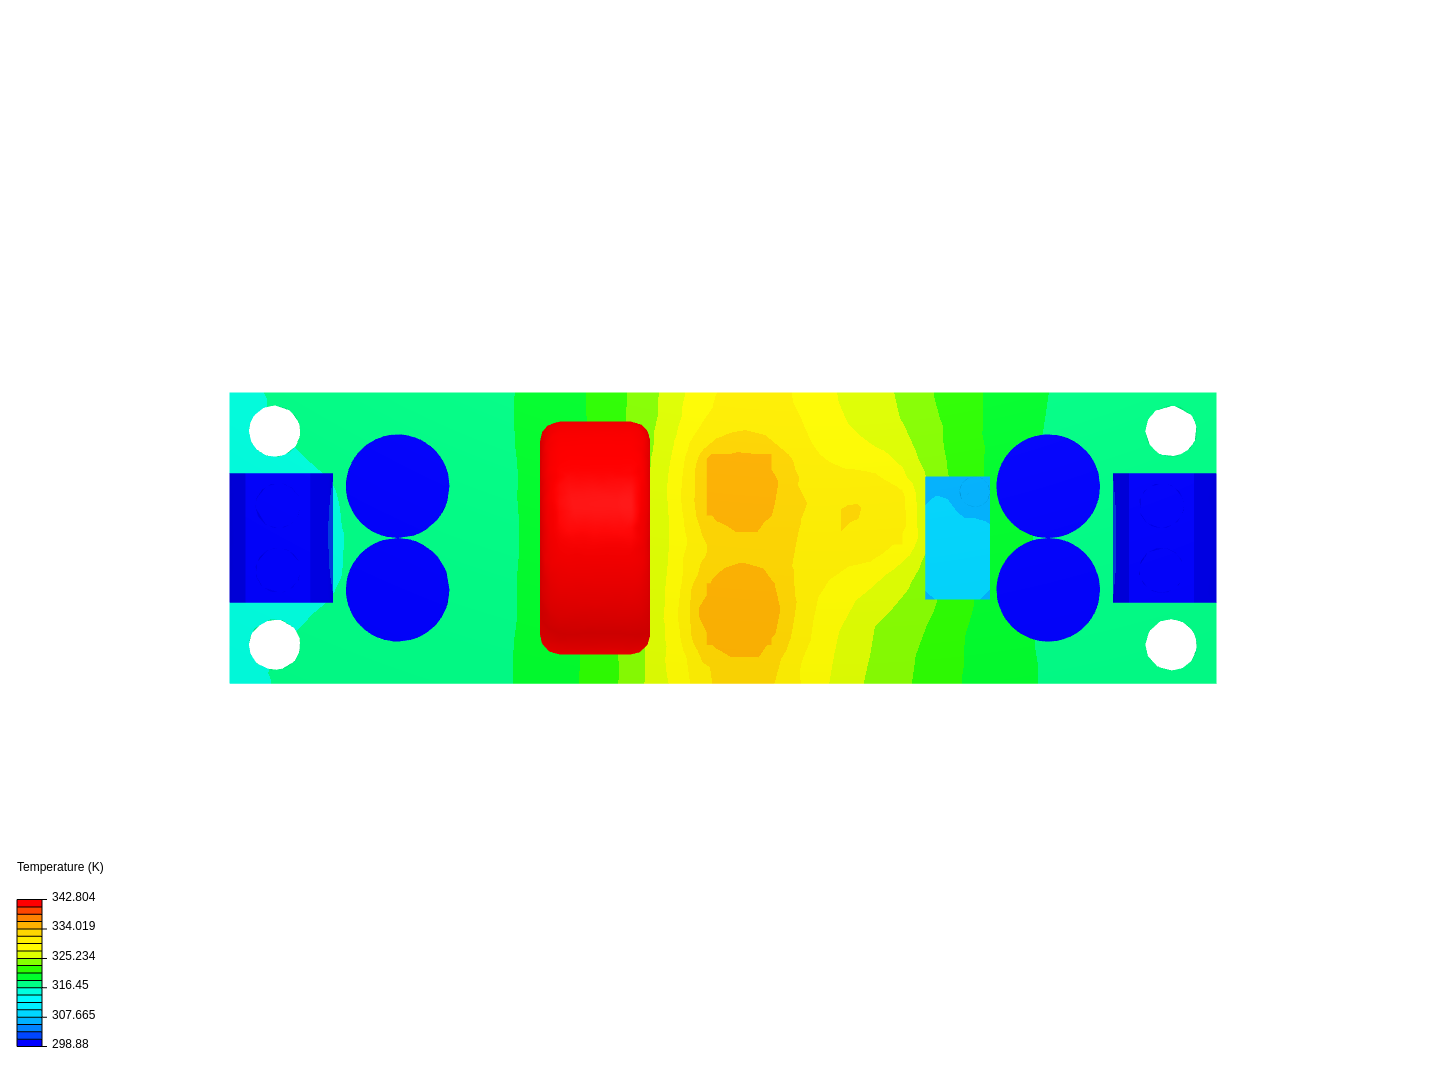 PCB_heating image